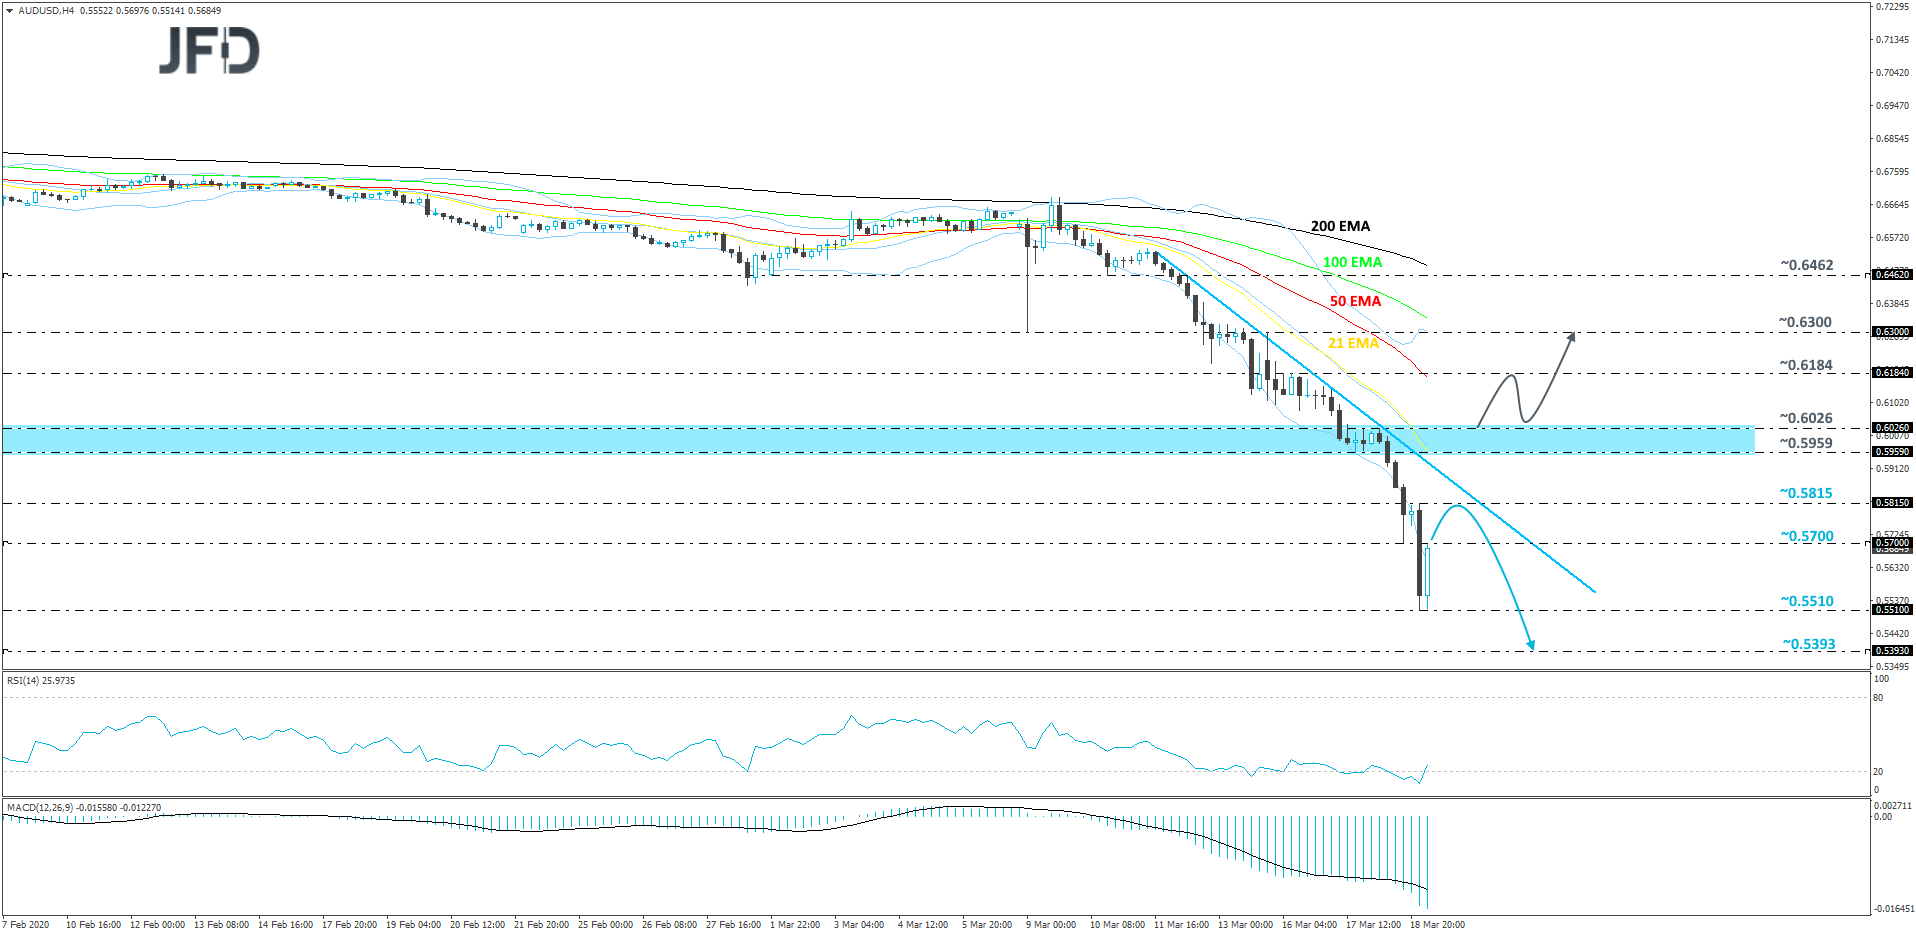 AUD/USD 4-hour chart technical analysis